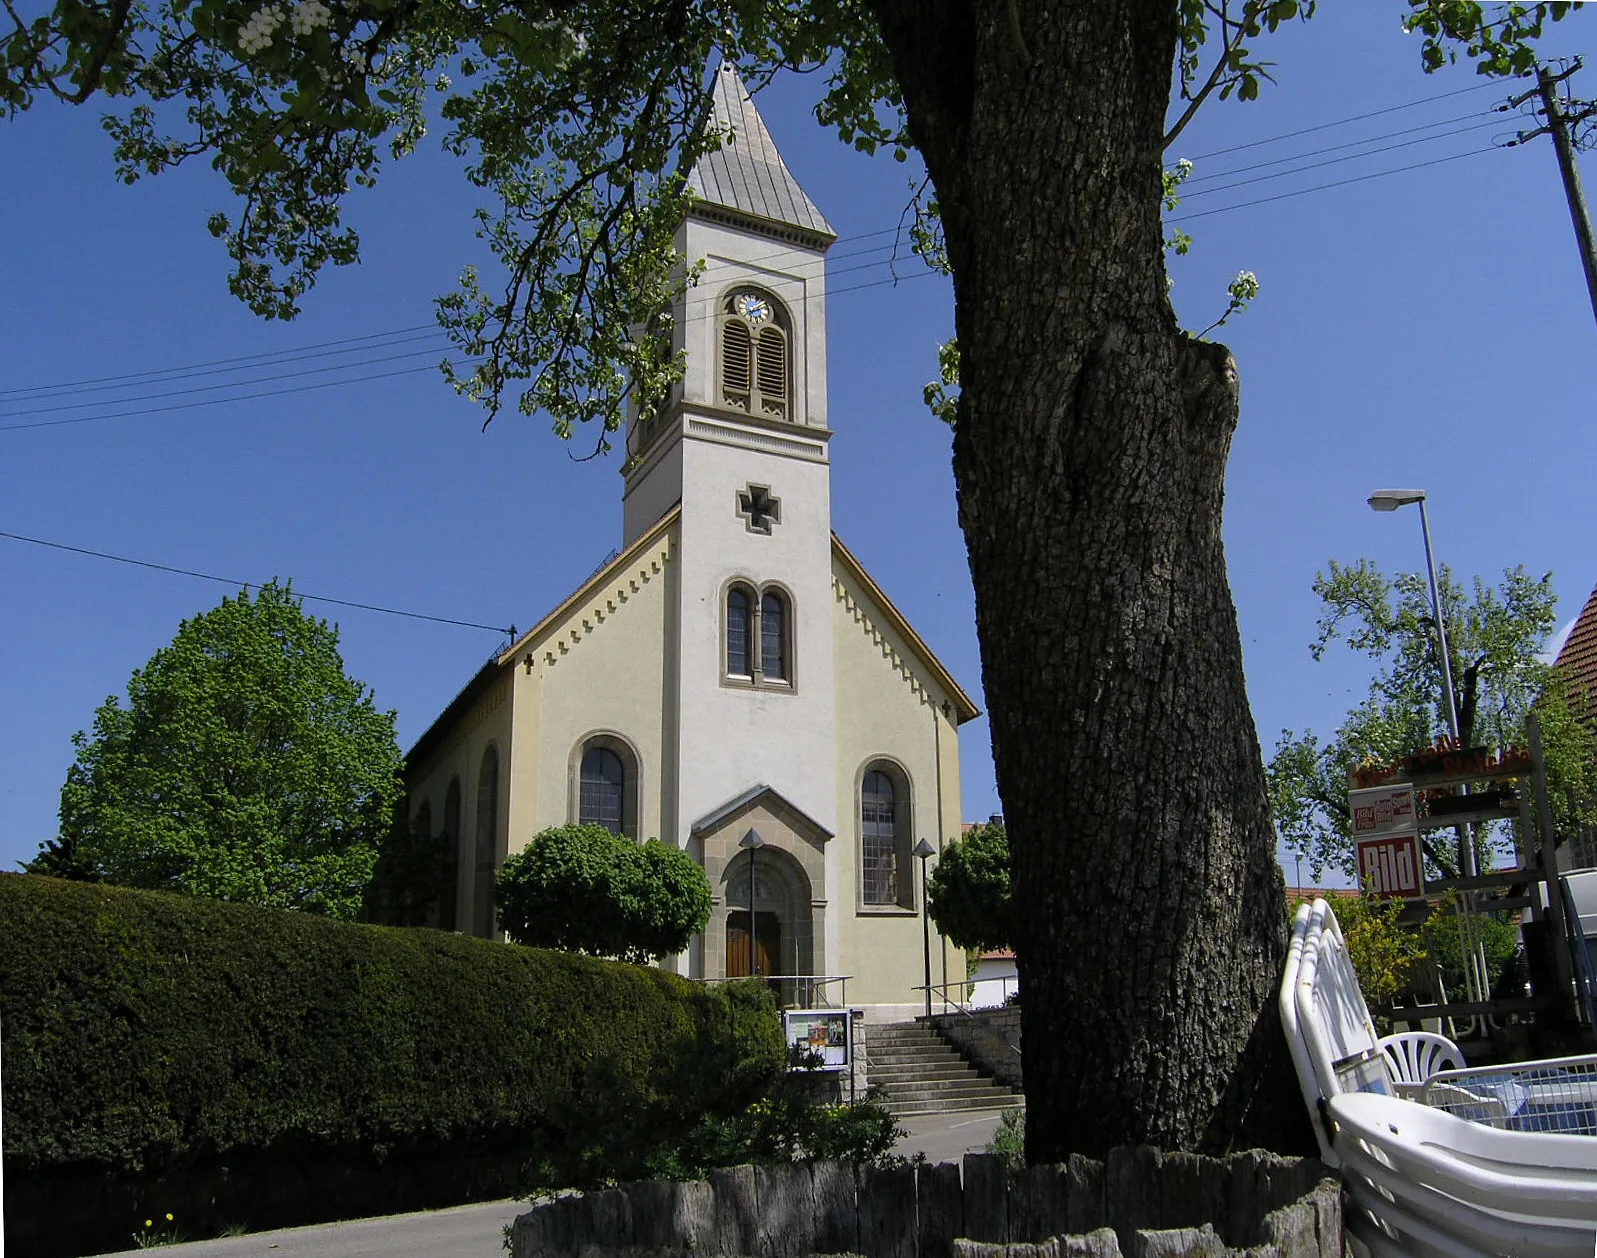 Photo showing: Bollingen. Kirche zum Heiligen Stephanus

Date: 11 May 2006